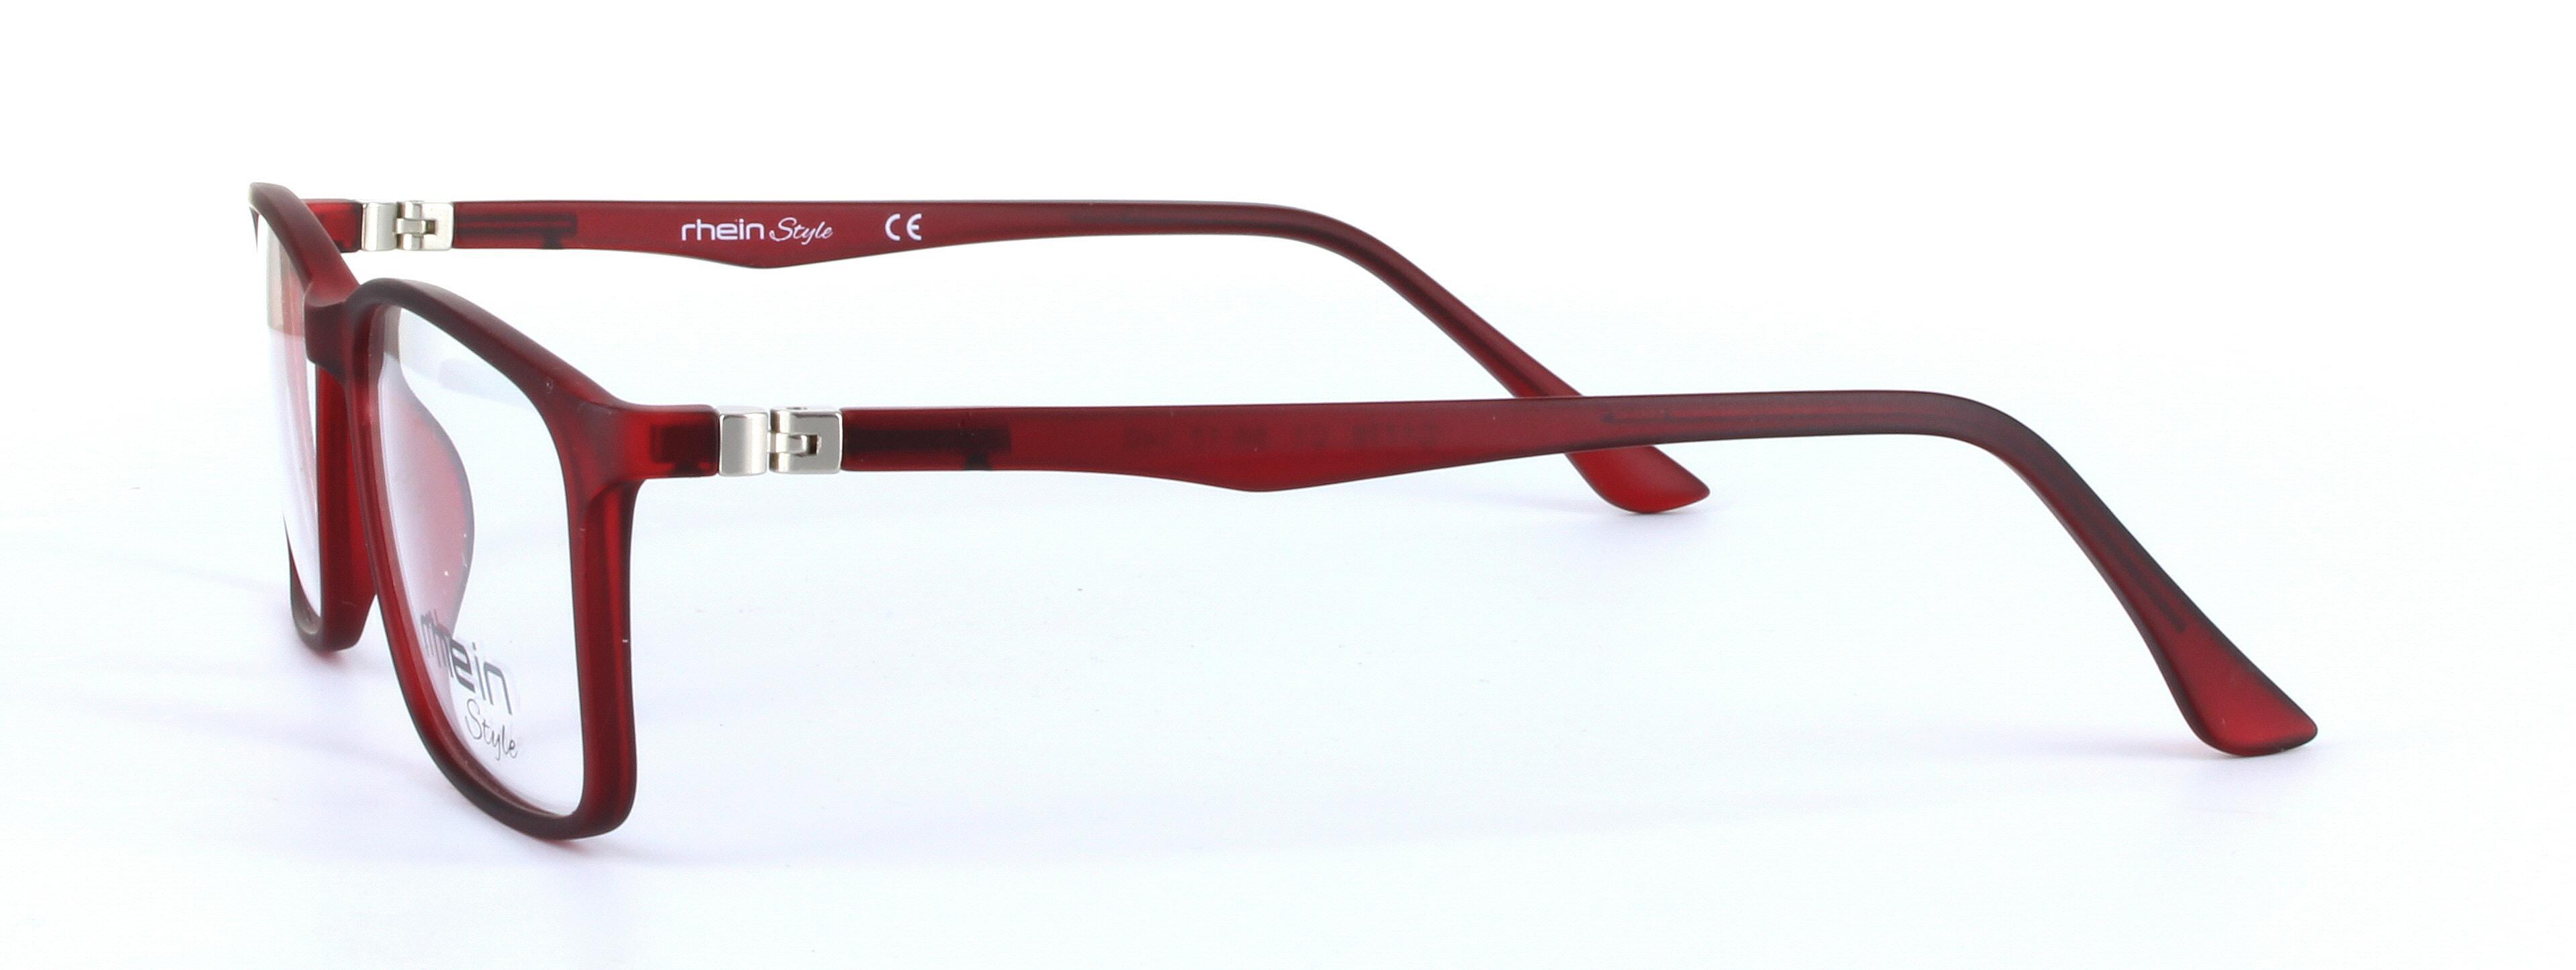 Franky Reddish Brown Full Rim Oval Rectangular Plastic Glasses - Image View 2